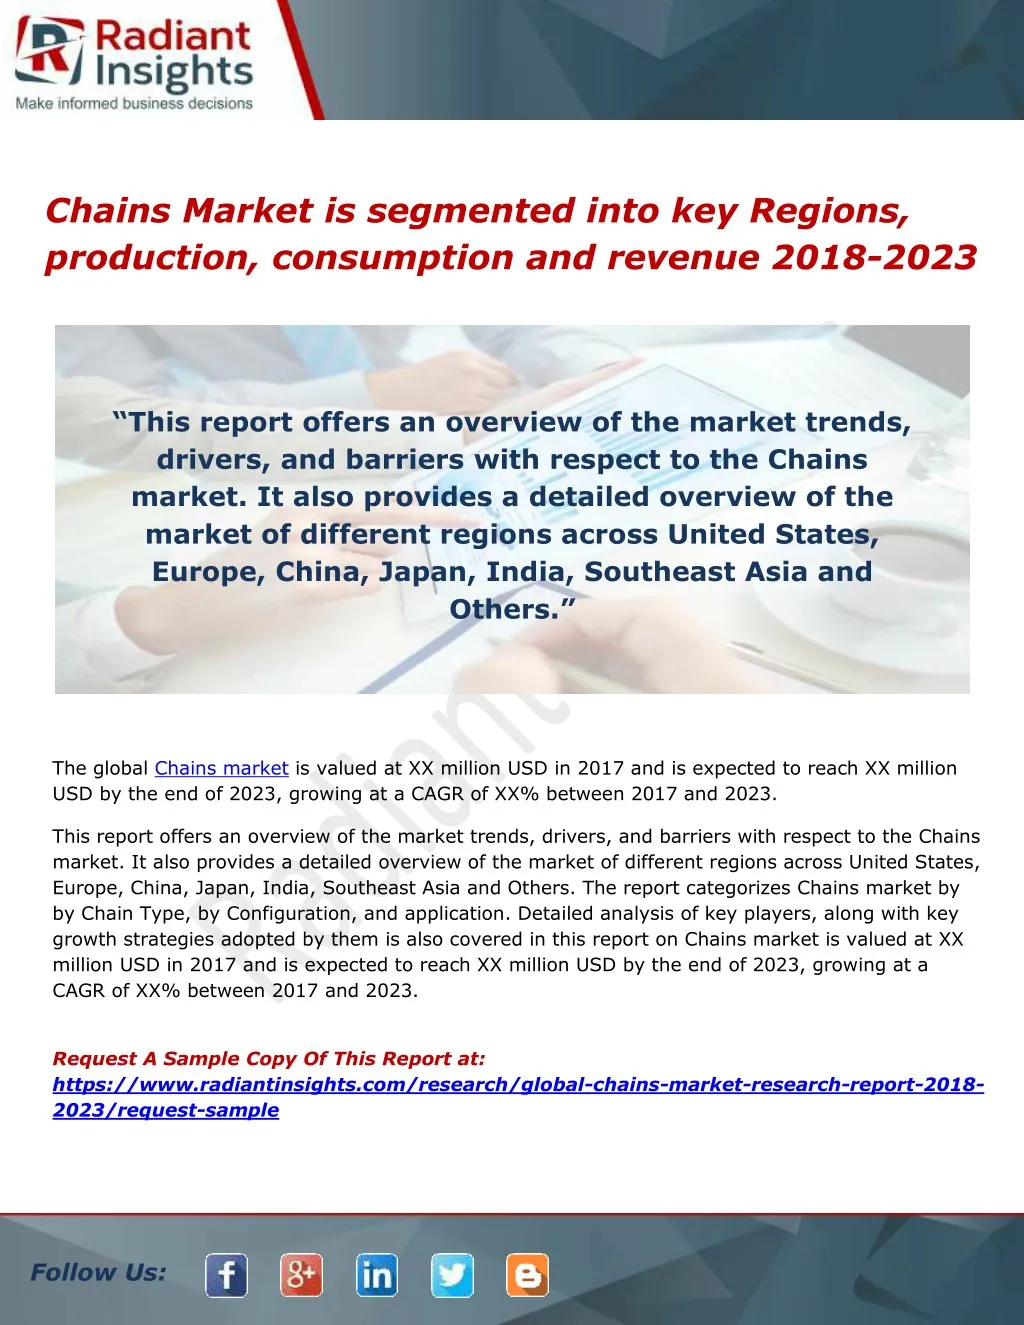 chains market is segmented into key regions